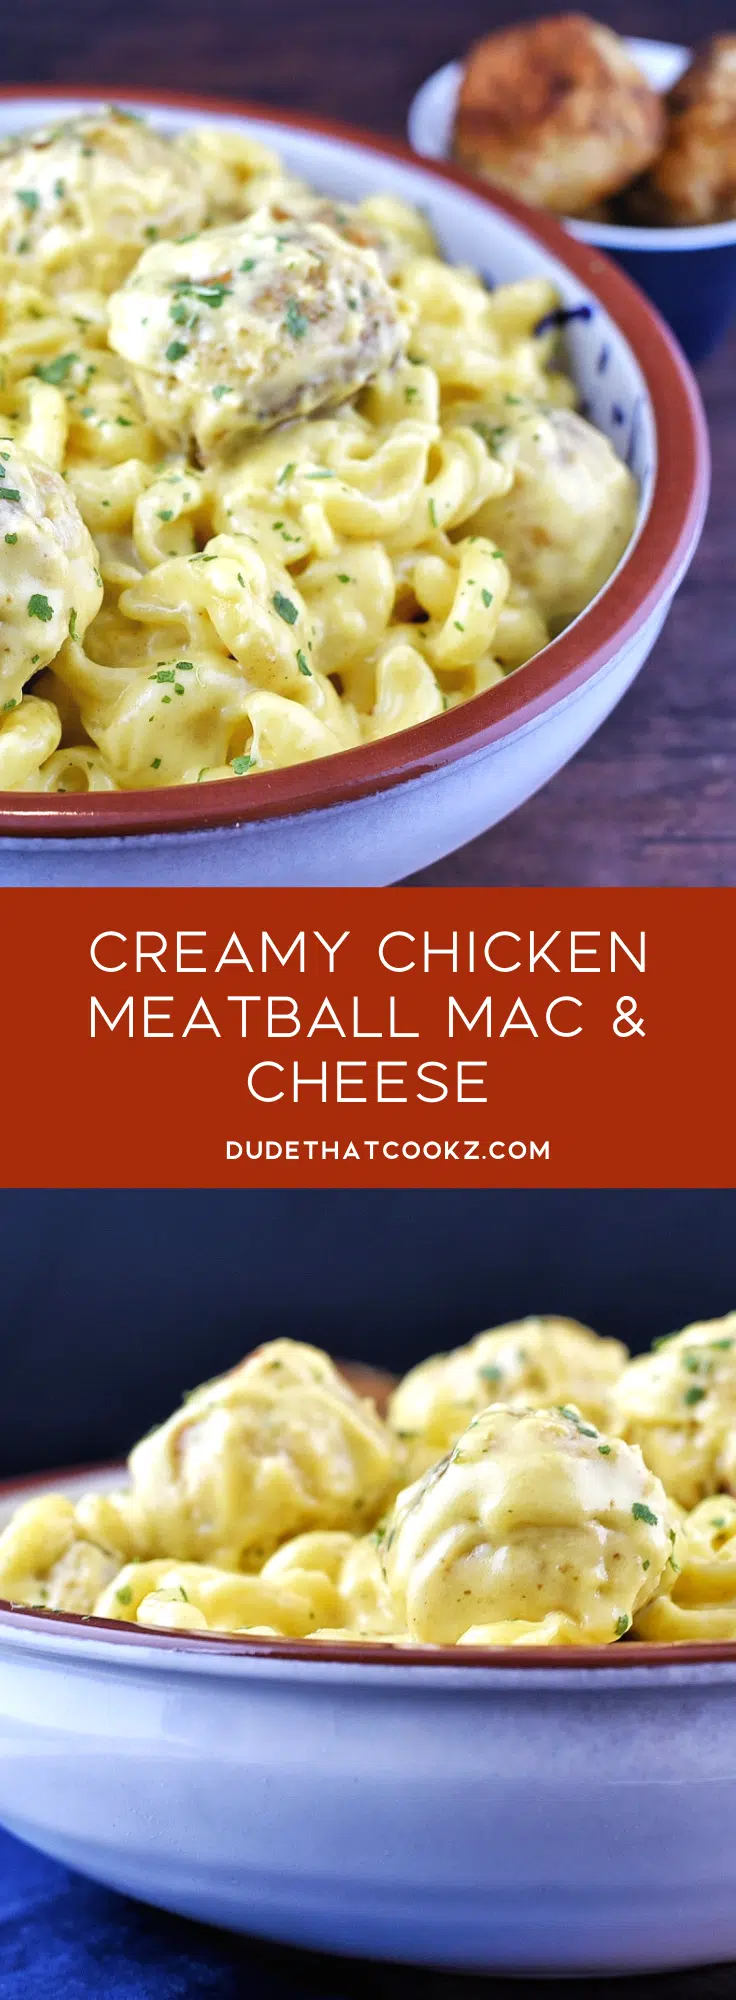 Creamy Chicken Meatball Mac & Cheese